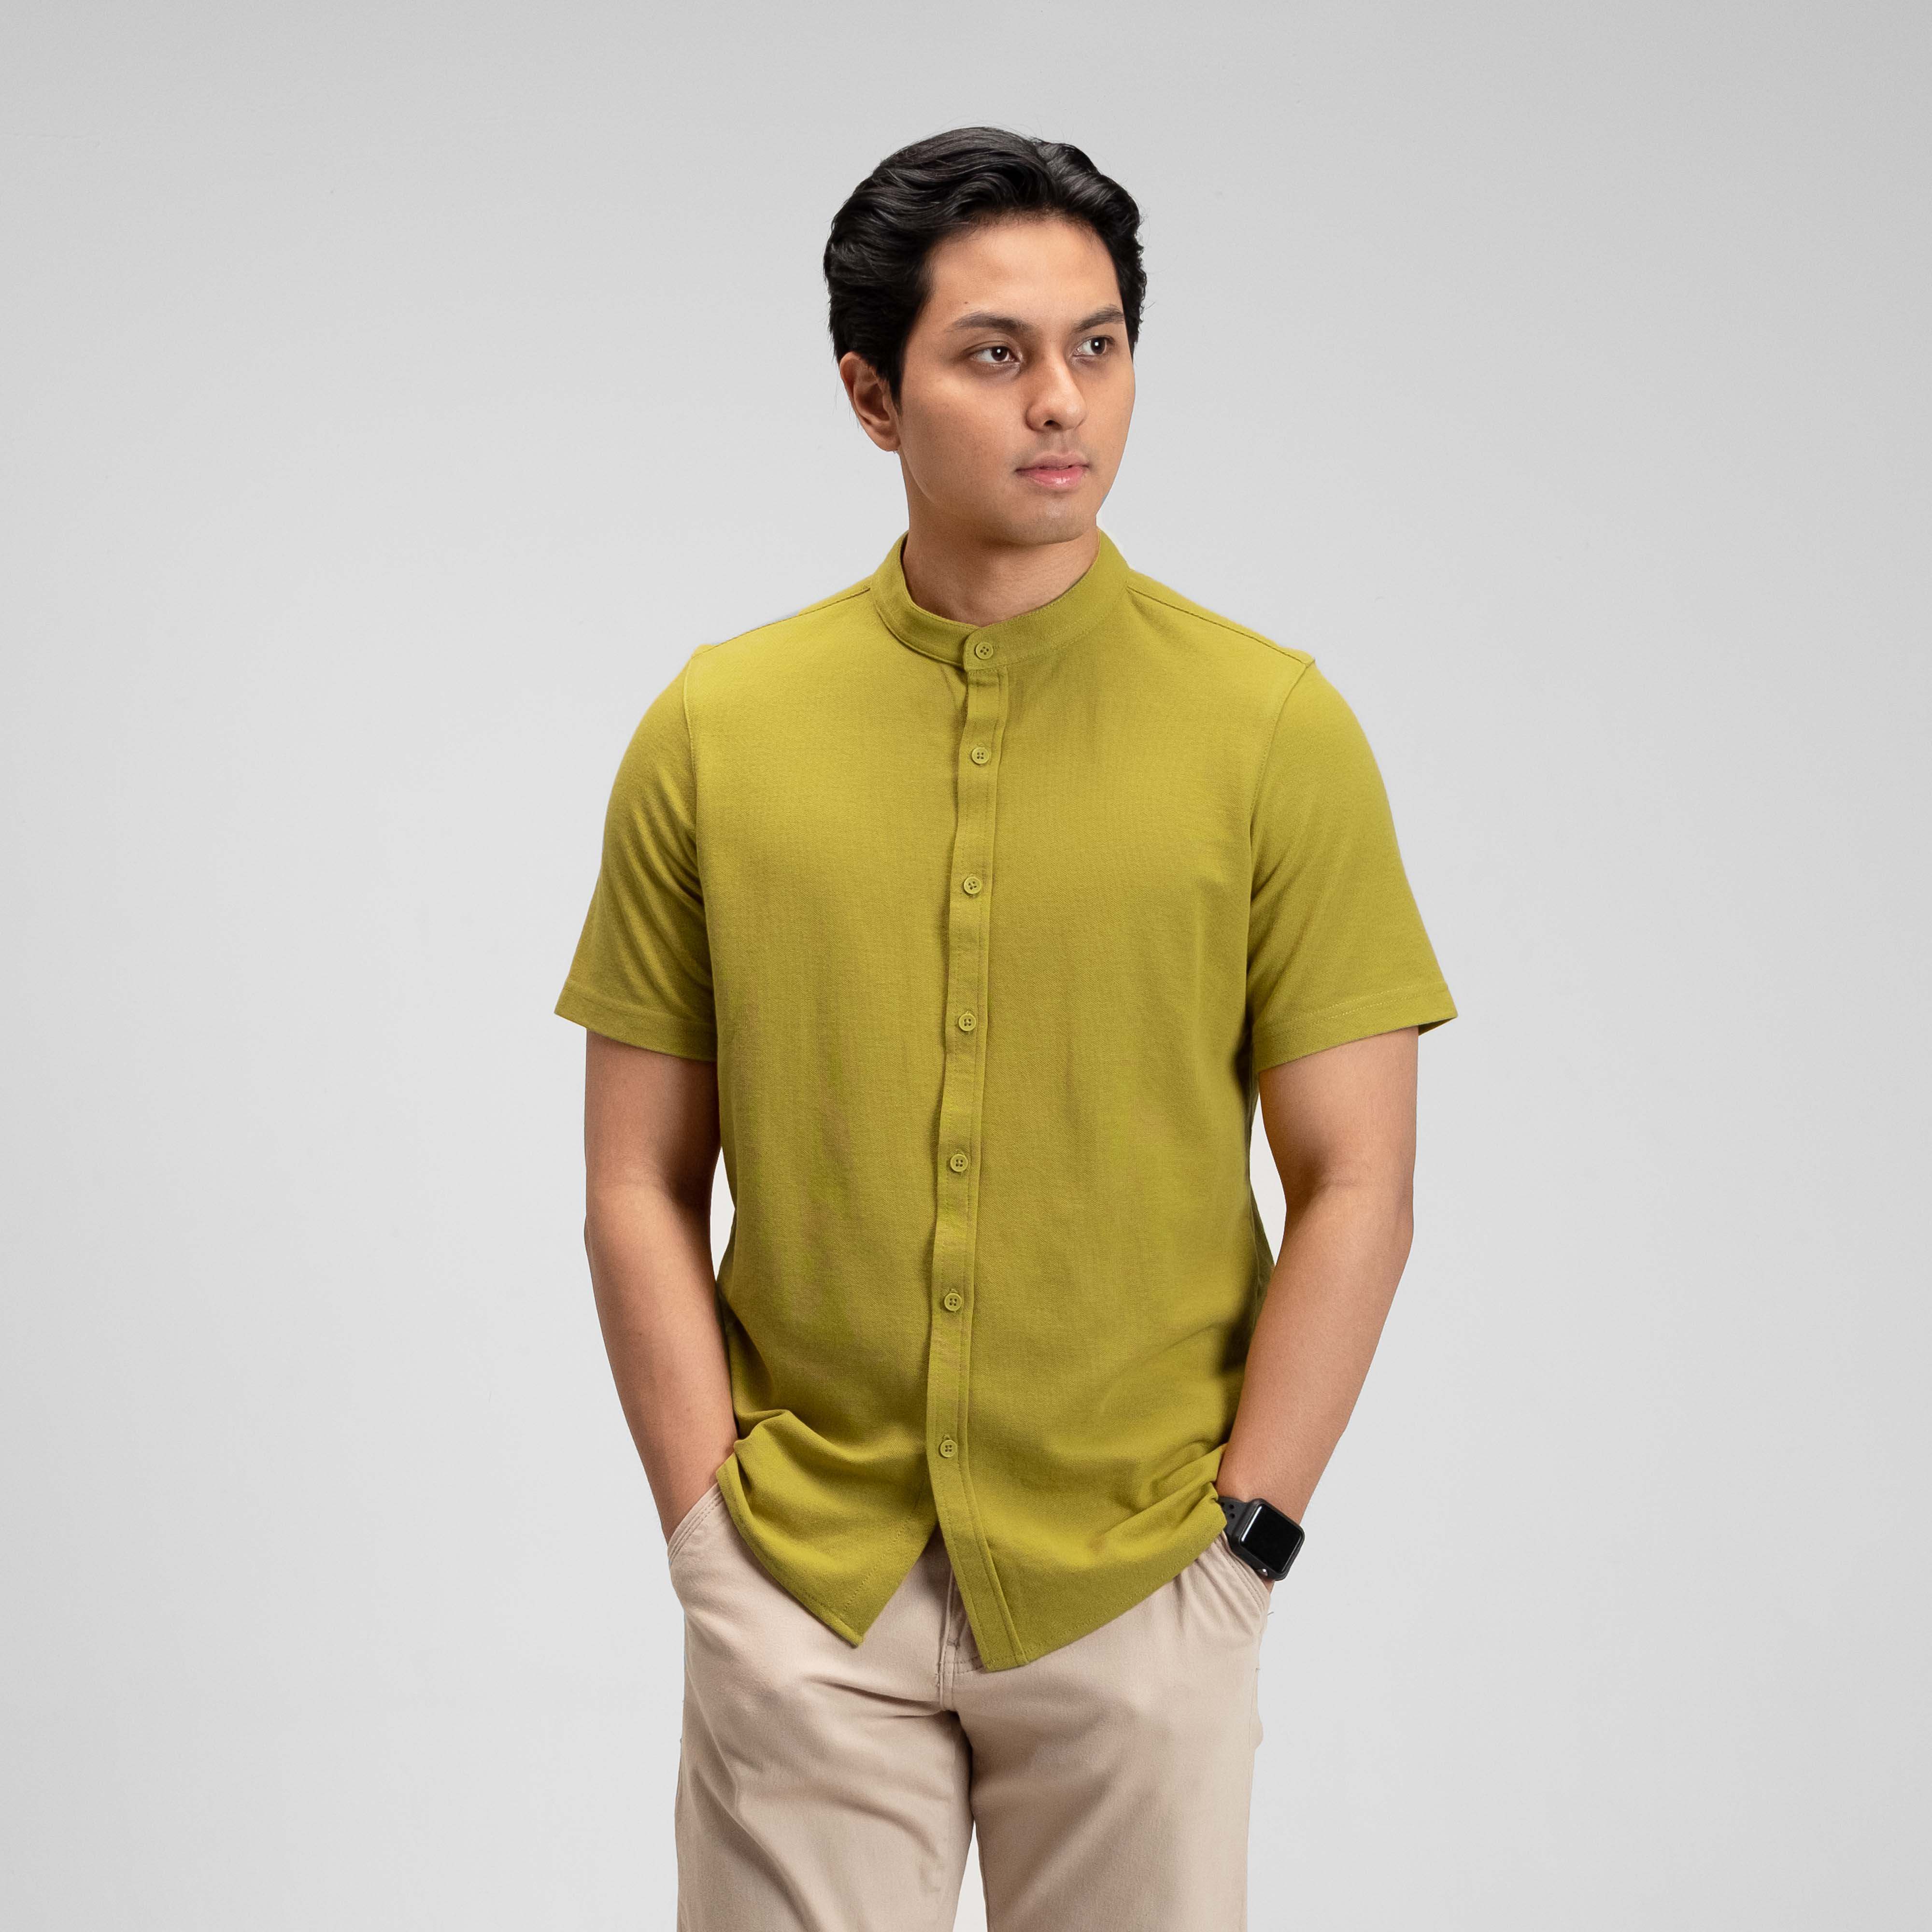 Brave ProComfort Shirt Short Sleeve New Colors